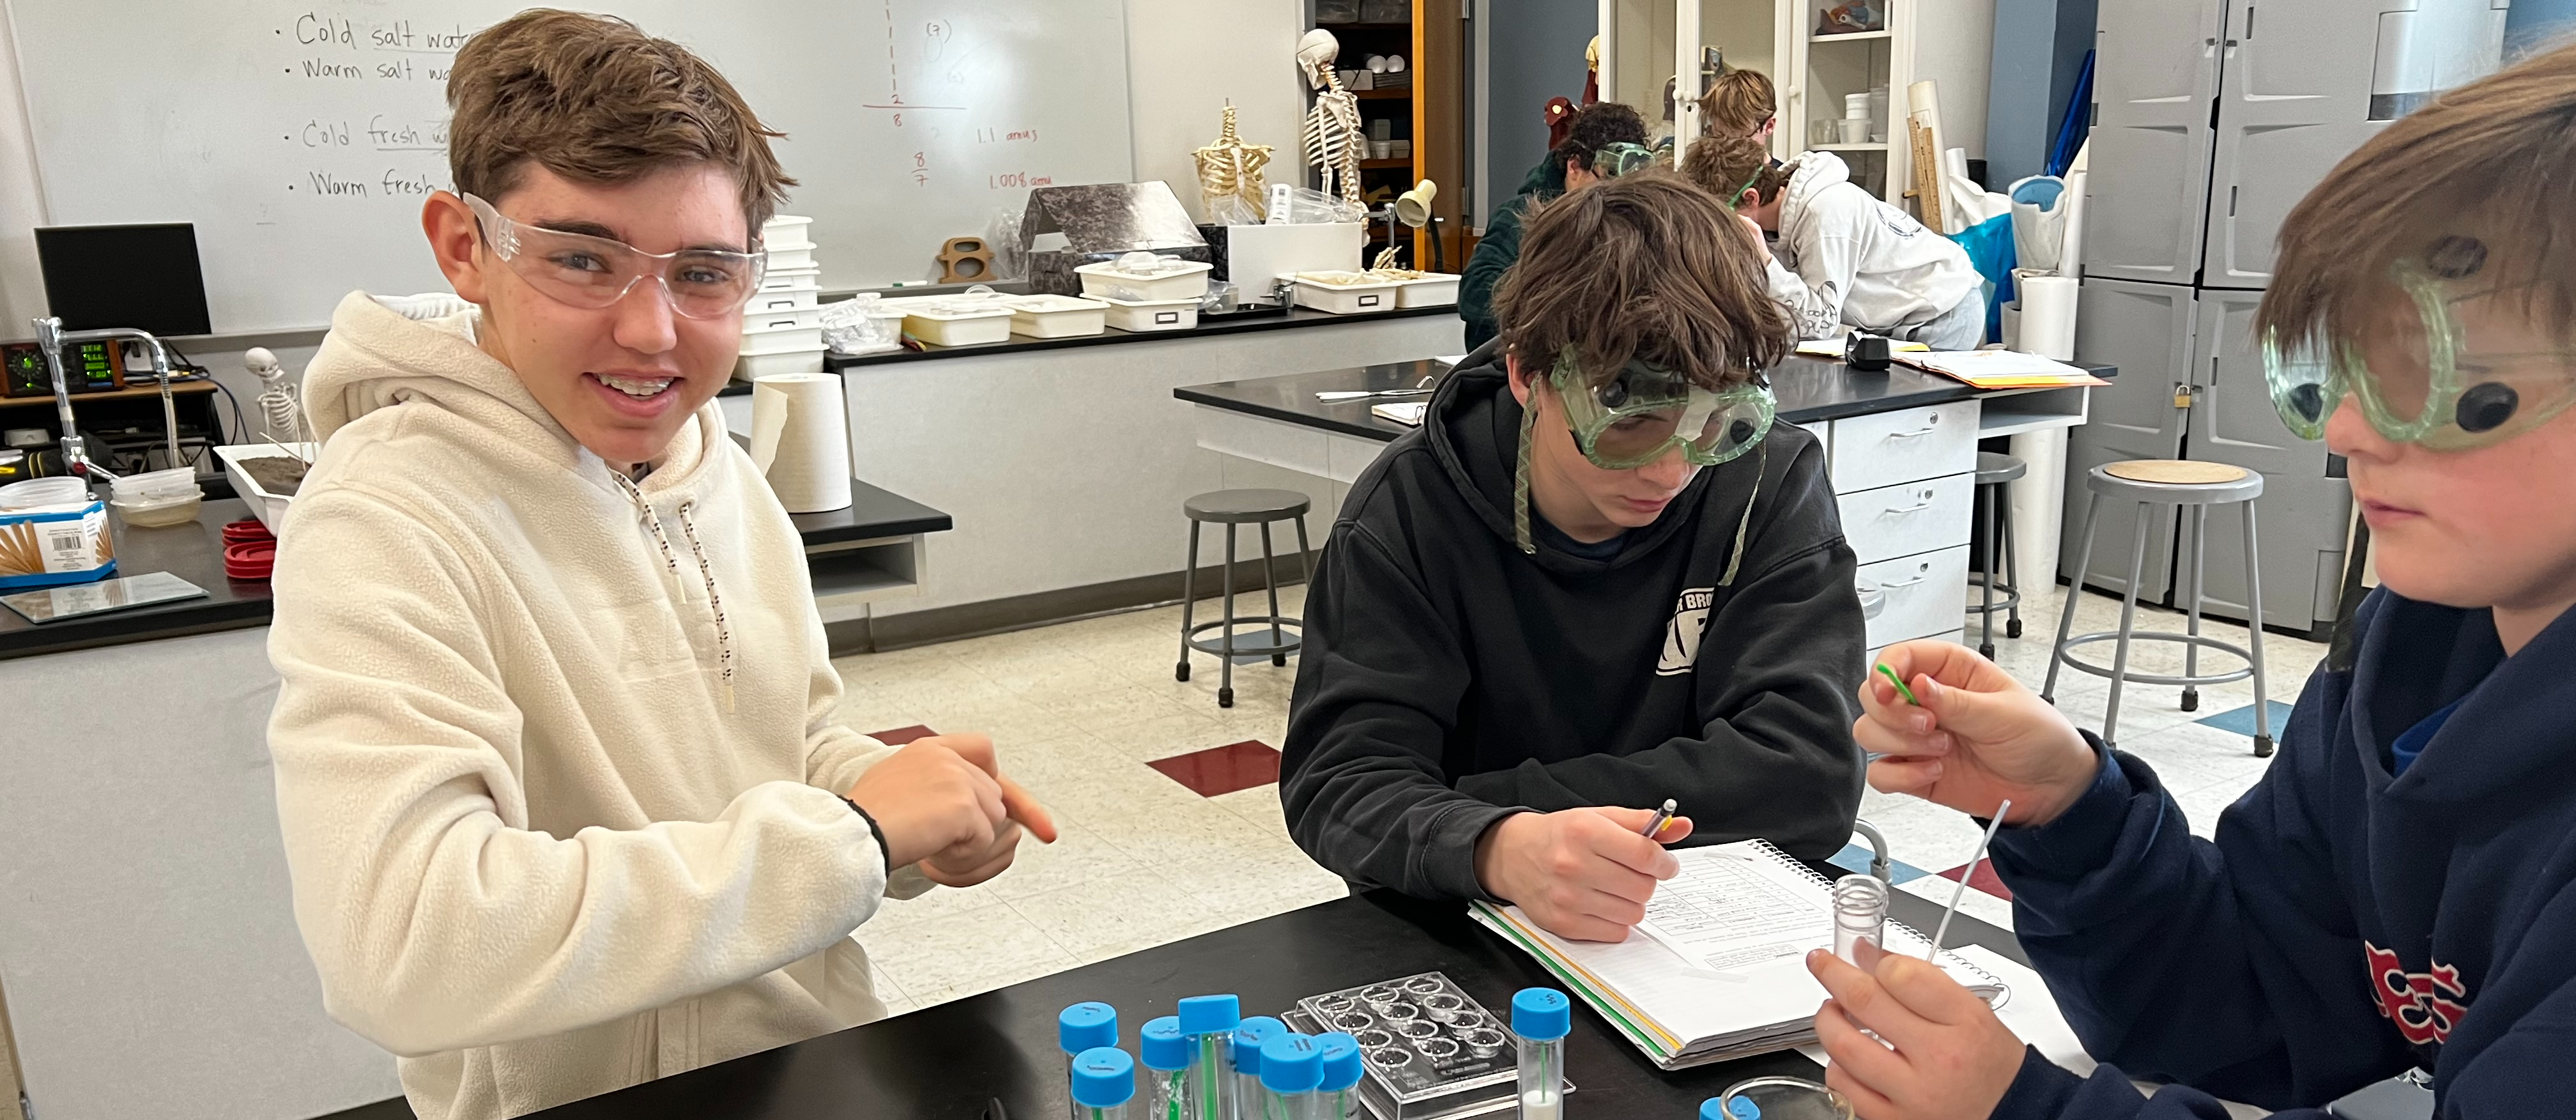 Science - Three High School Boys in Chemistry Class